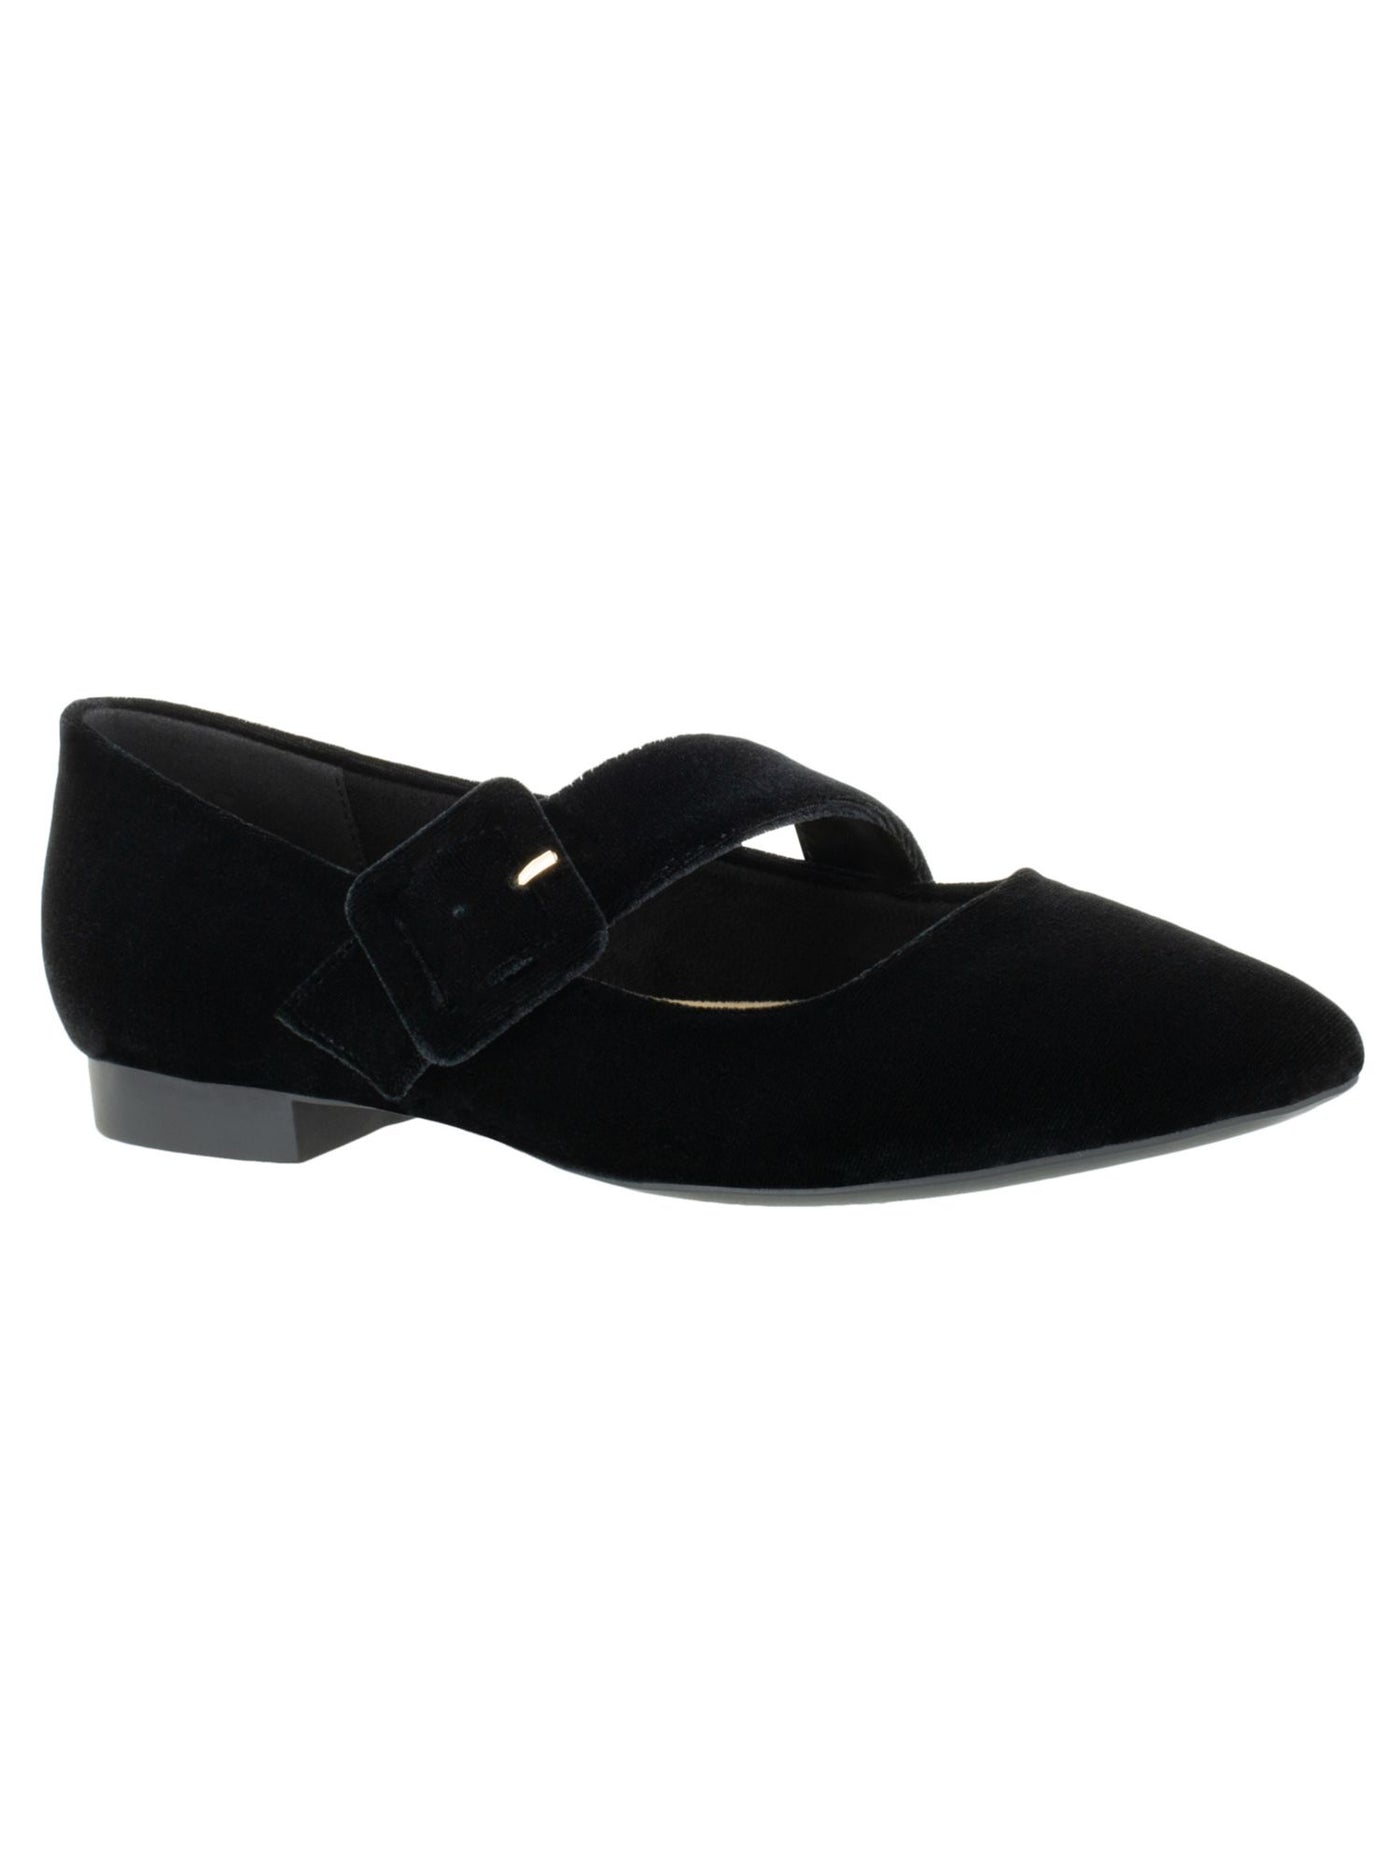 BELLA VITA Womens Black Mary Jane Padded Virginia Ii Pointed Toe Buckle Flats Shoes 12 N